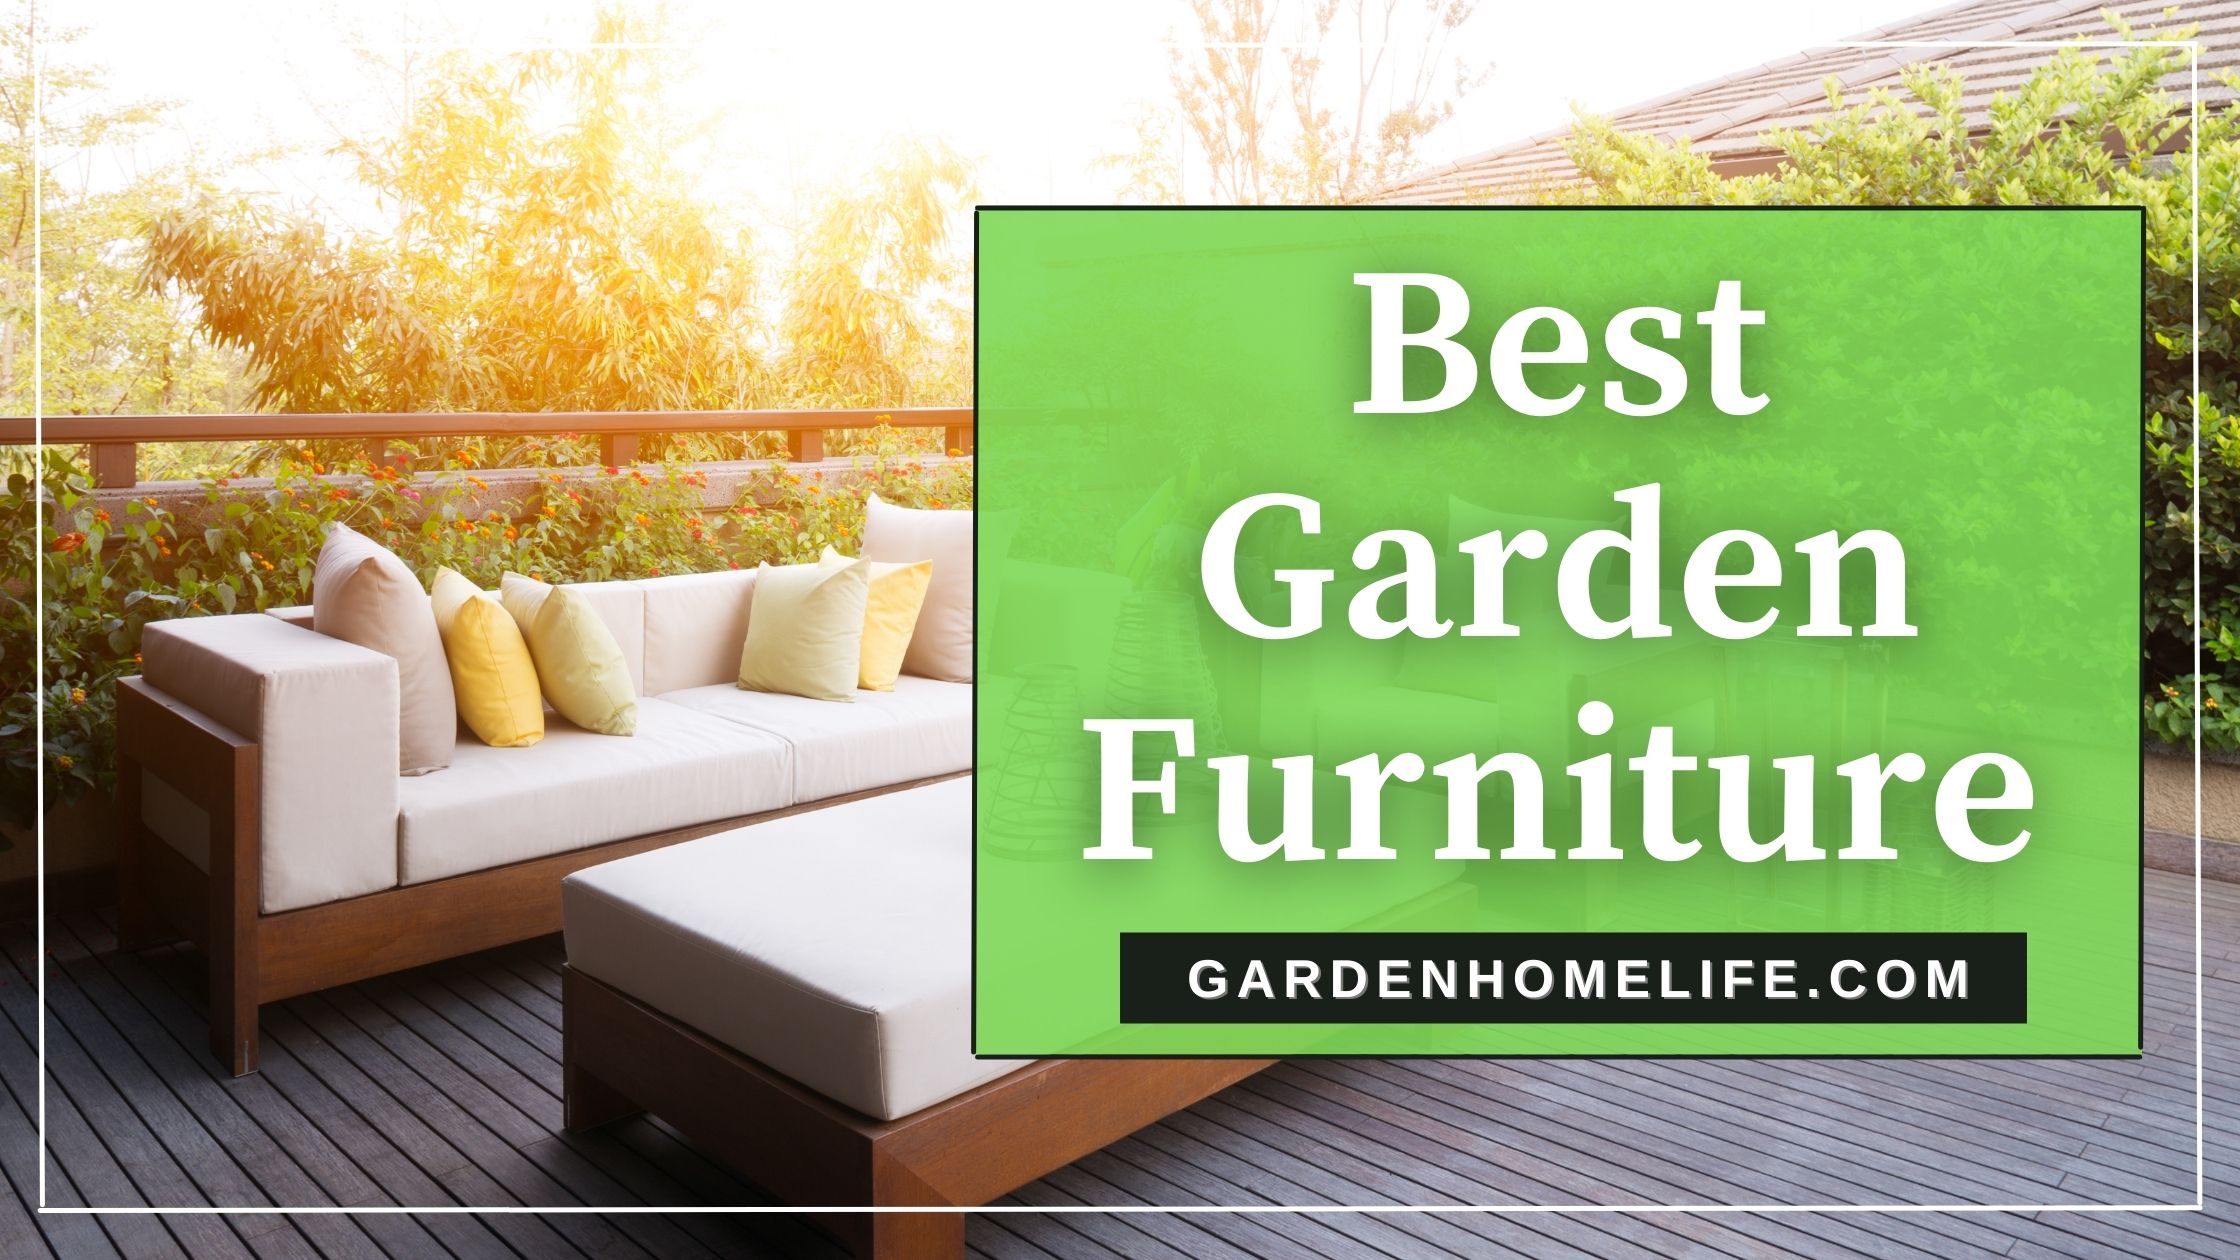 Best Garden Furniture selection ideas